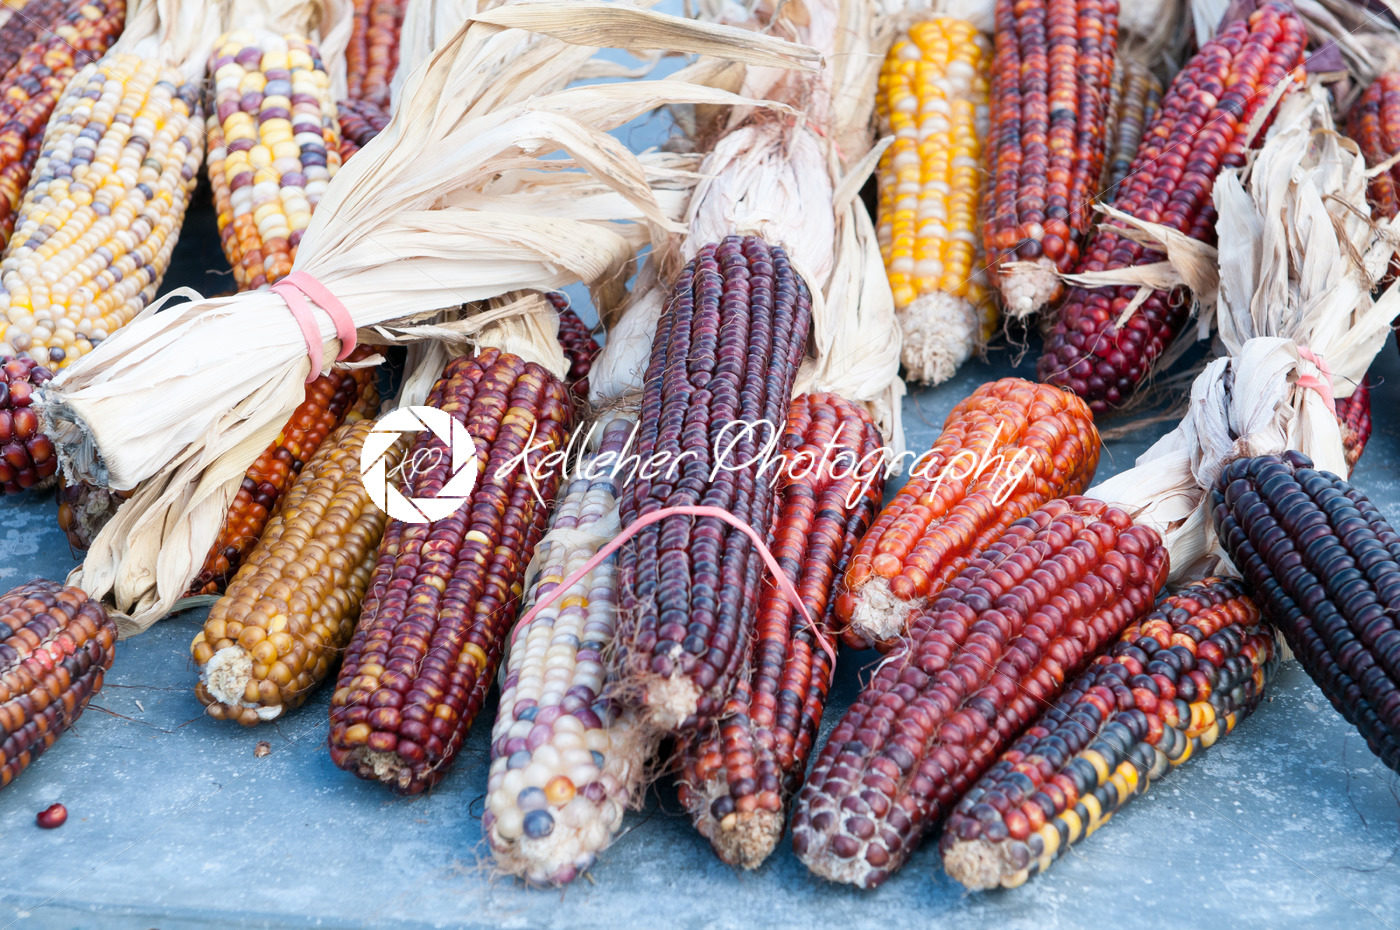 Decorative corn on the autumn market - Kelleher Photography Store